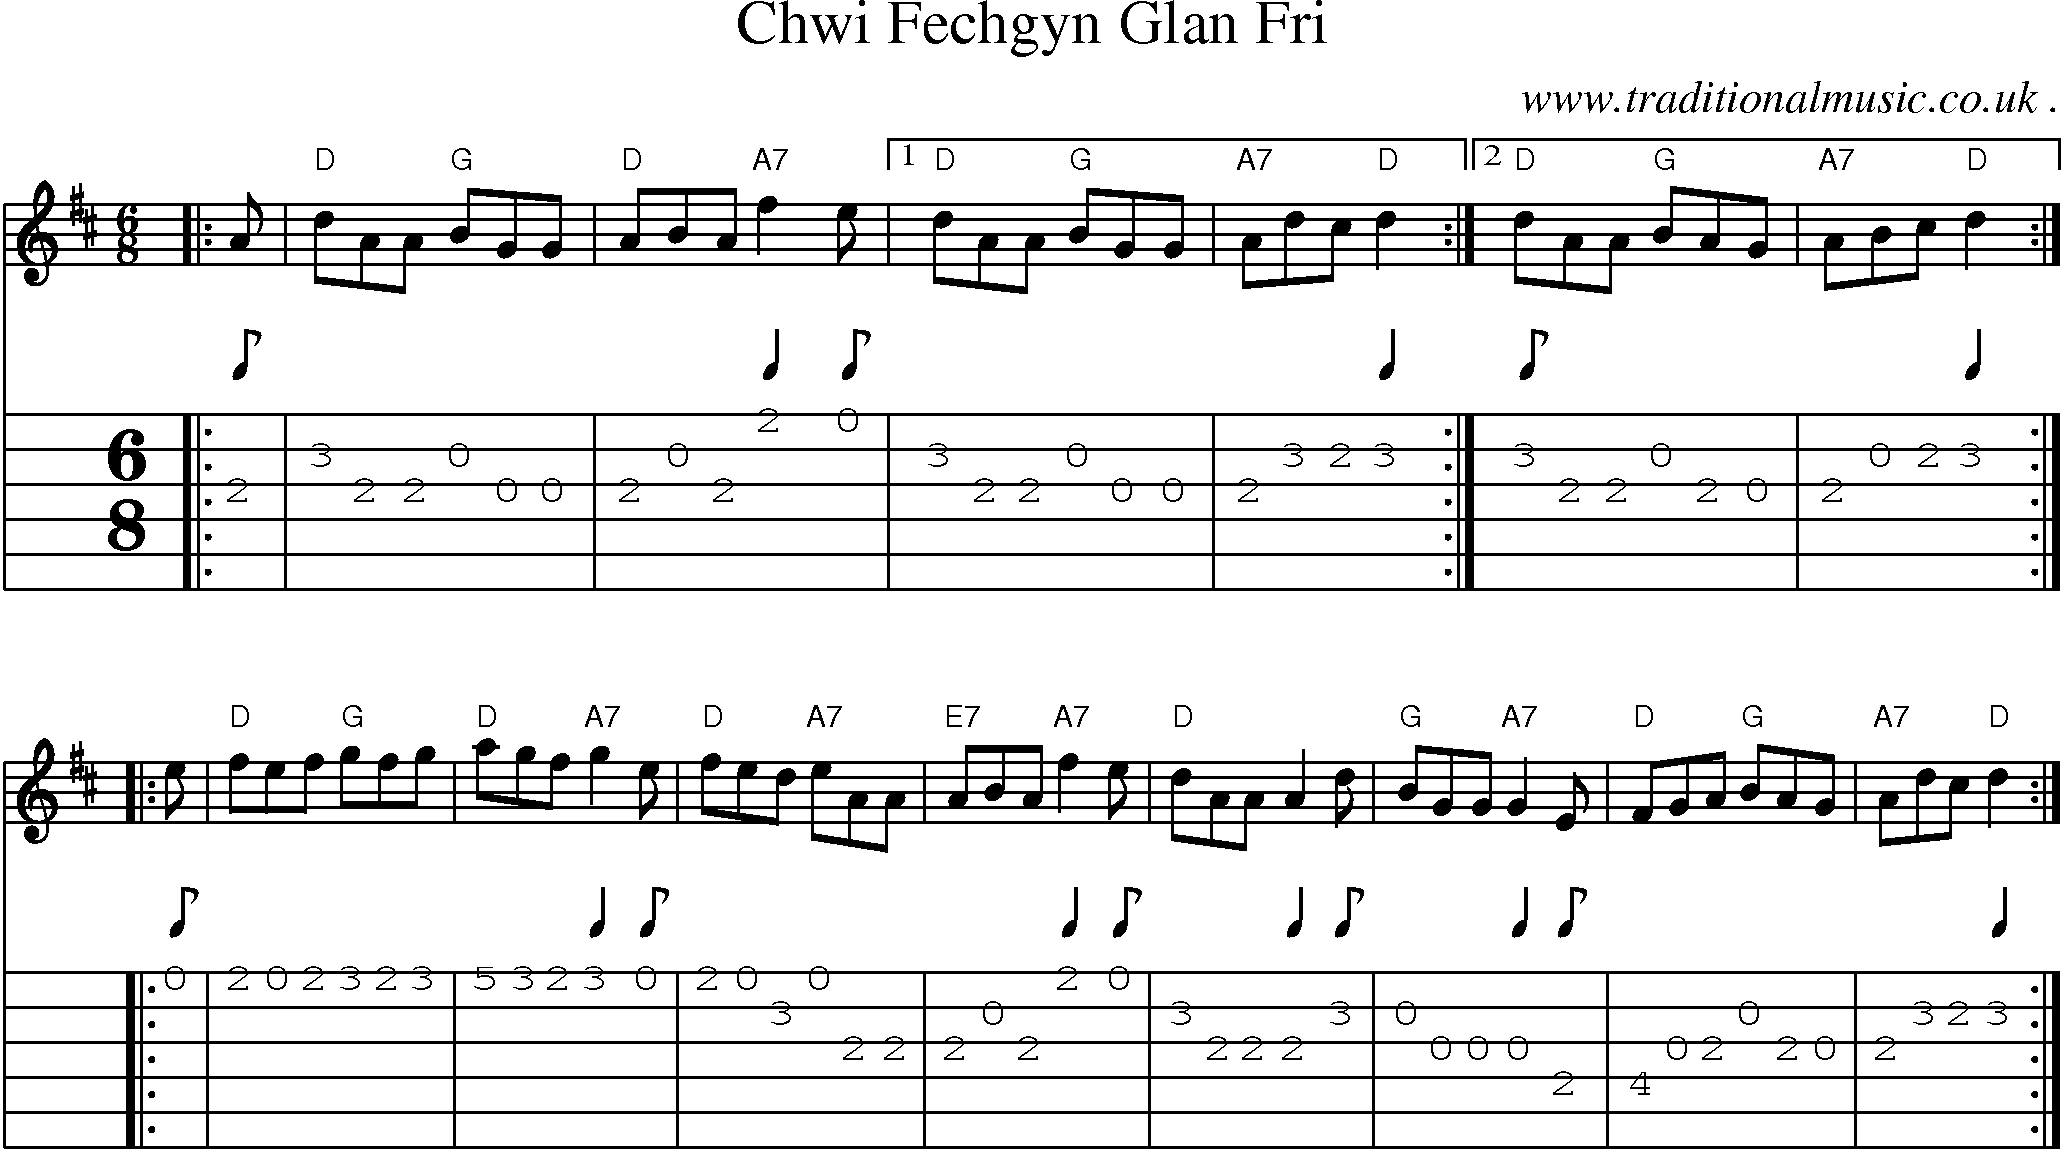 Sheet-music  score, Chords and Guitar Tabs for Chwi Fechgyn Glan Fri